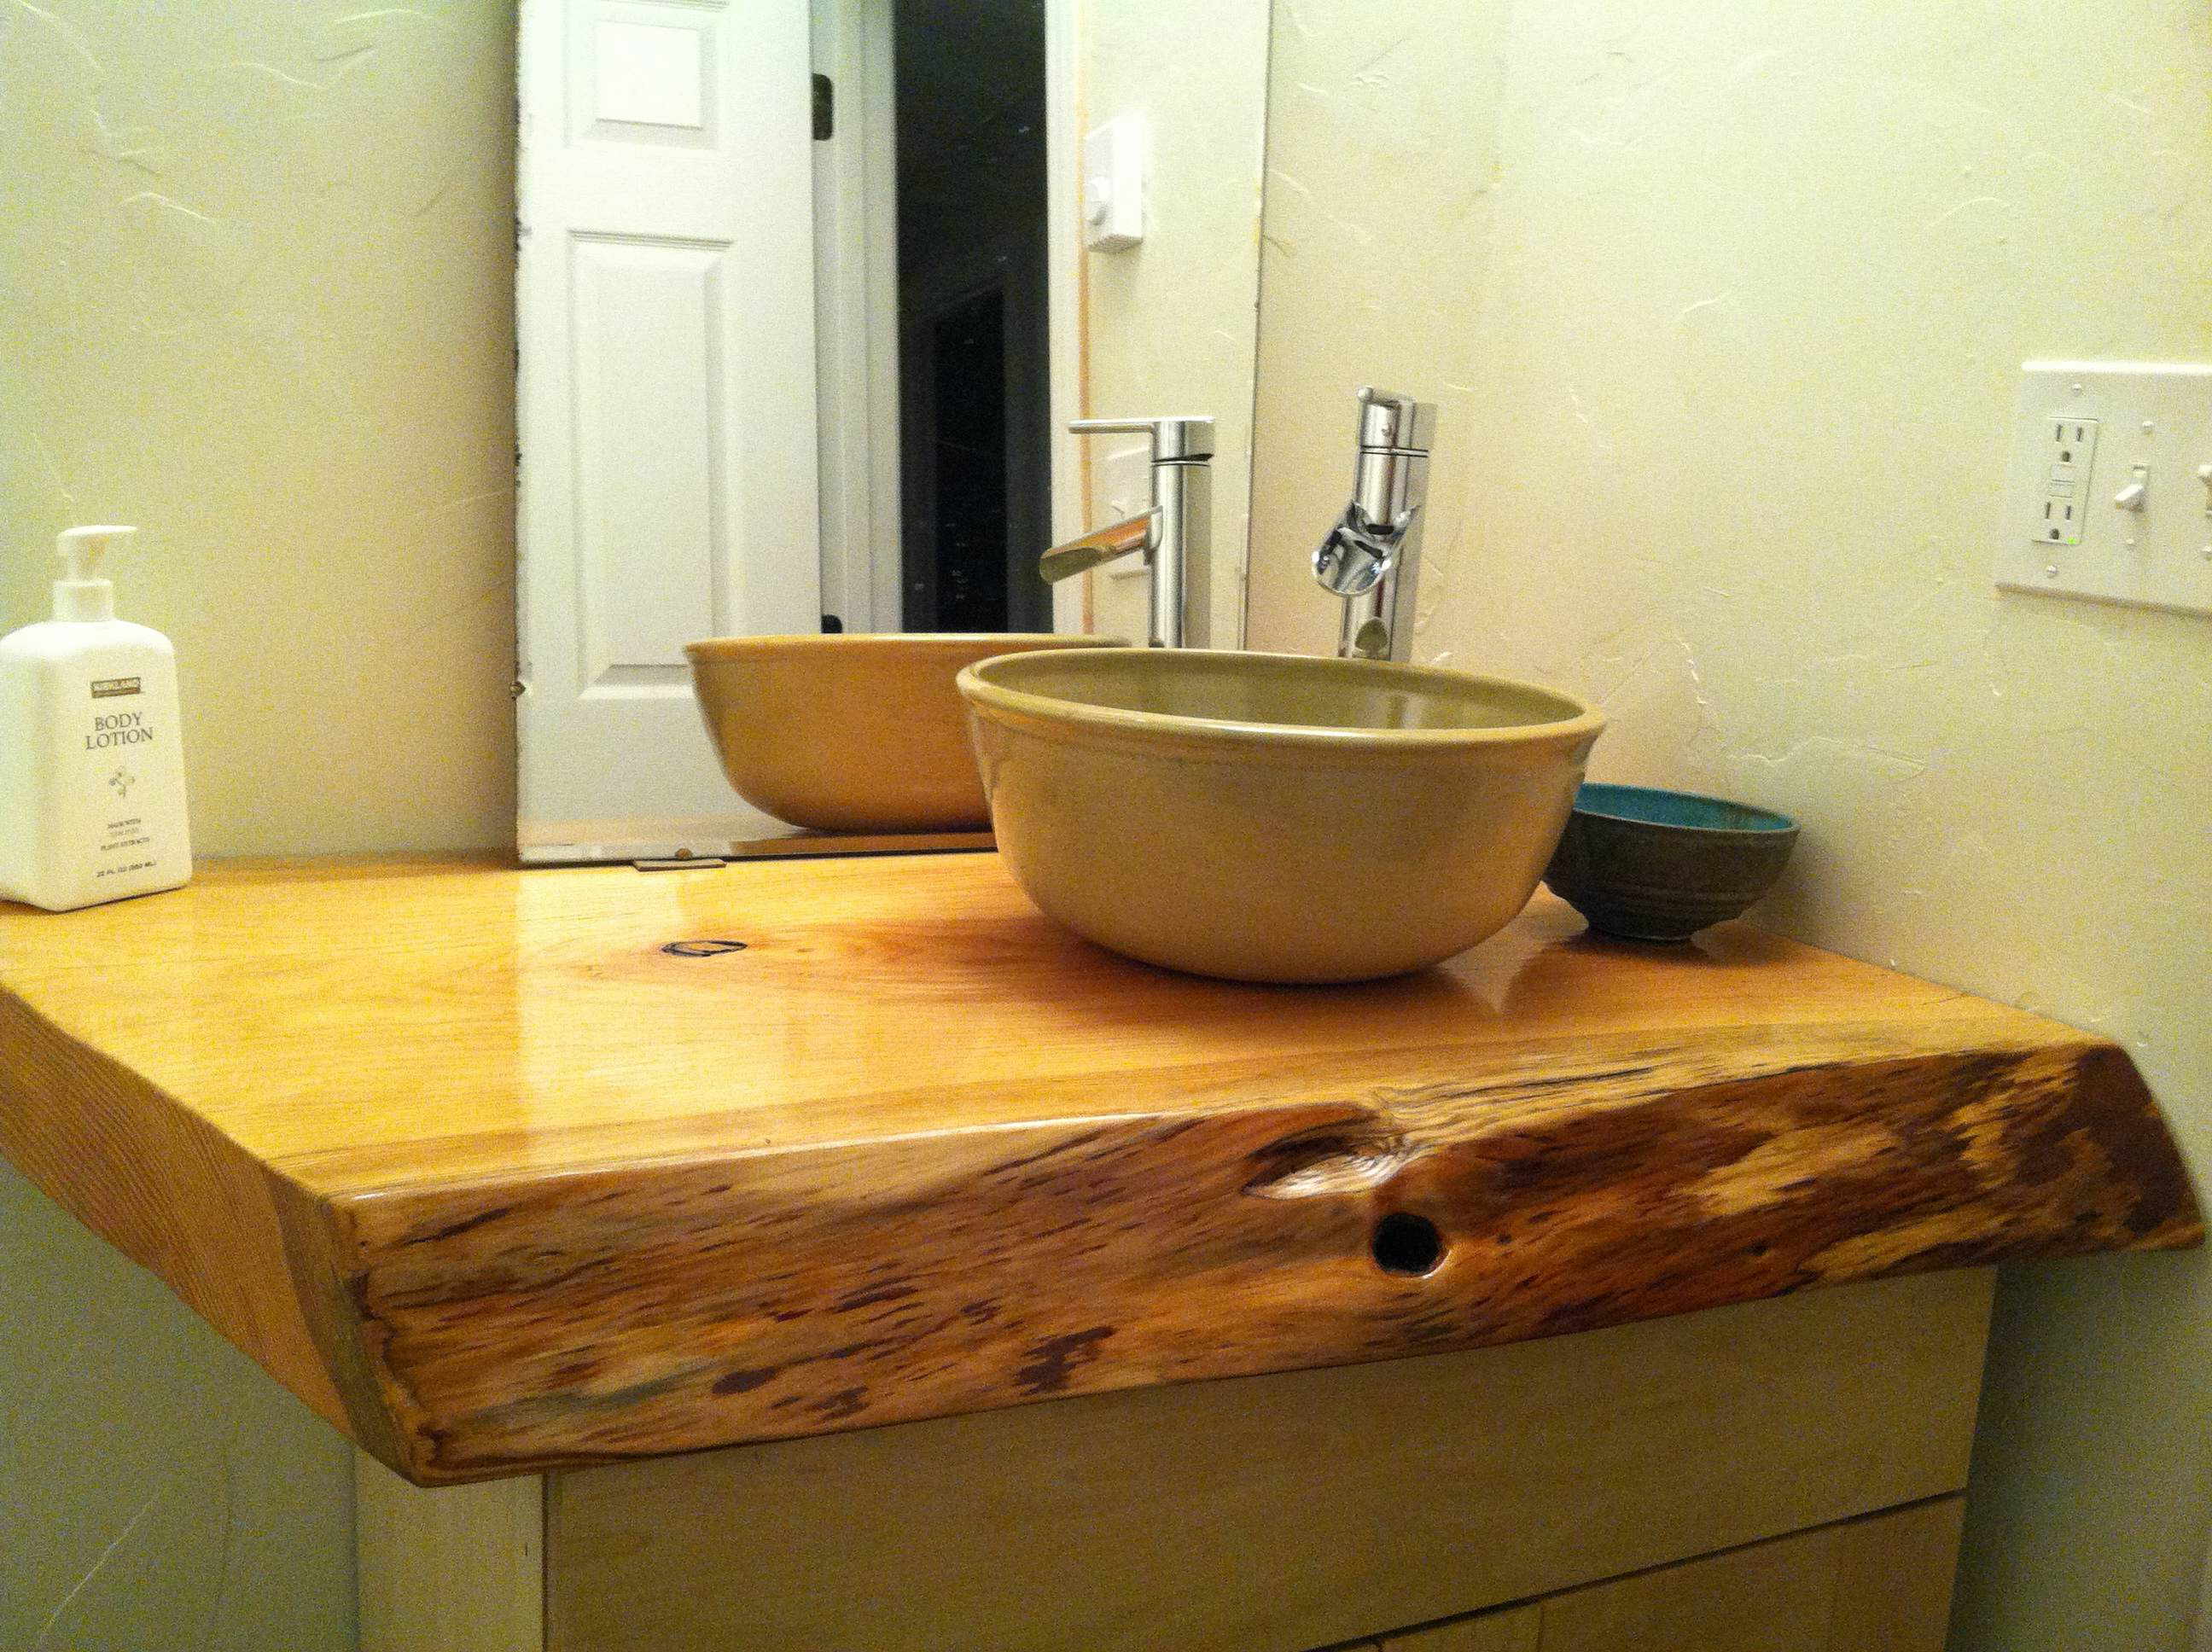 Doug fir slab, turned into a gorgeous bathroom counter top